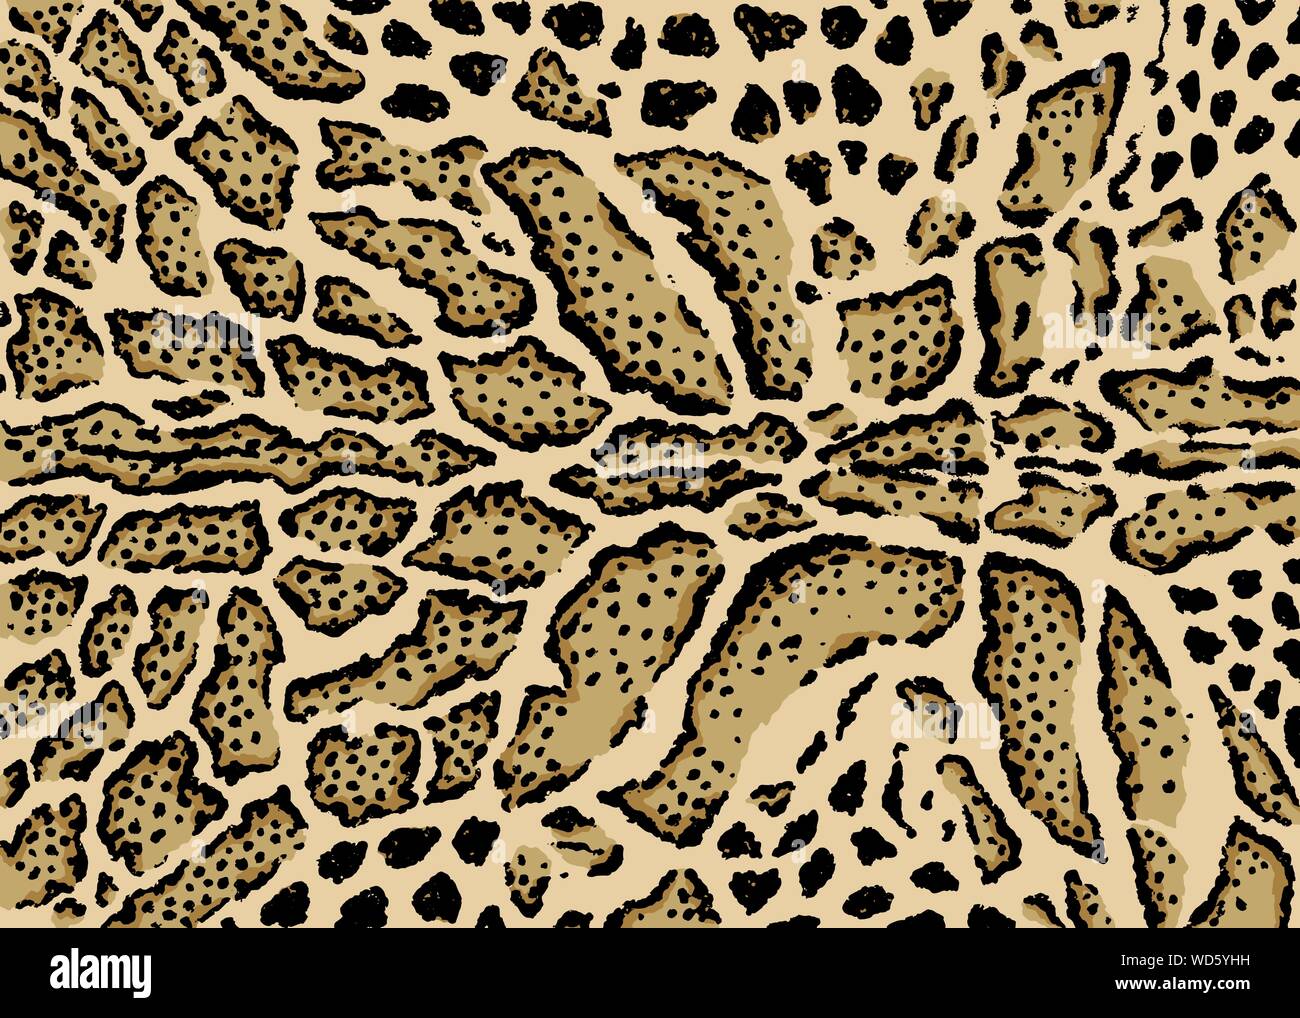 Clouded leopard skin pattern design. Leopard spots print vector illustration background. Wildlife fur skin design illustration for print, web, home de Stock Vector